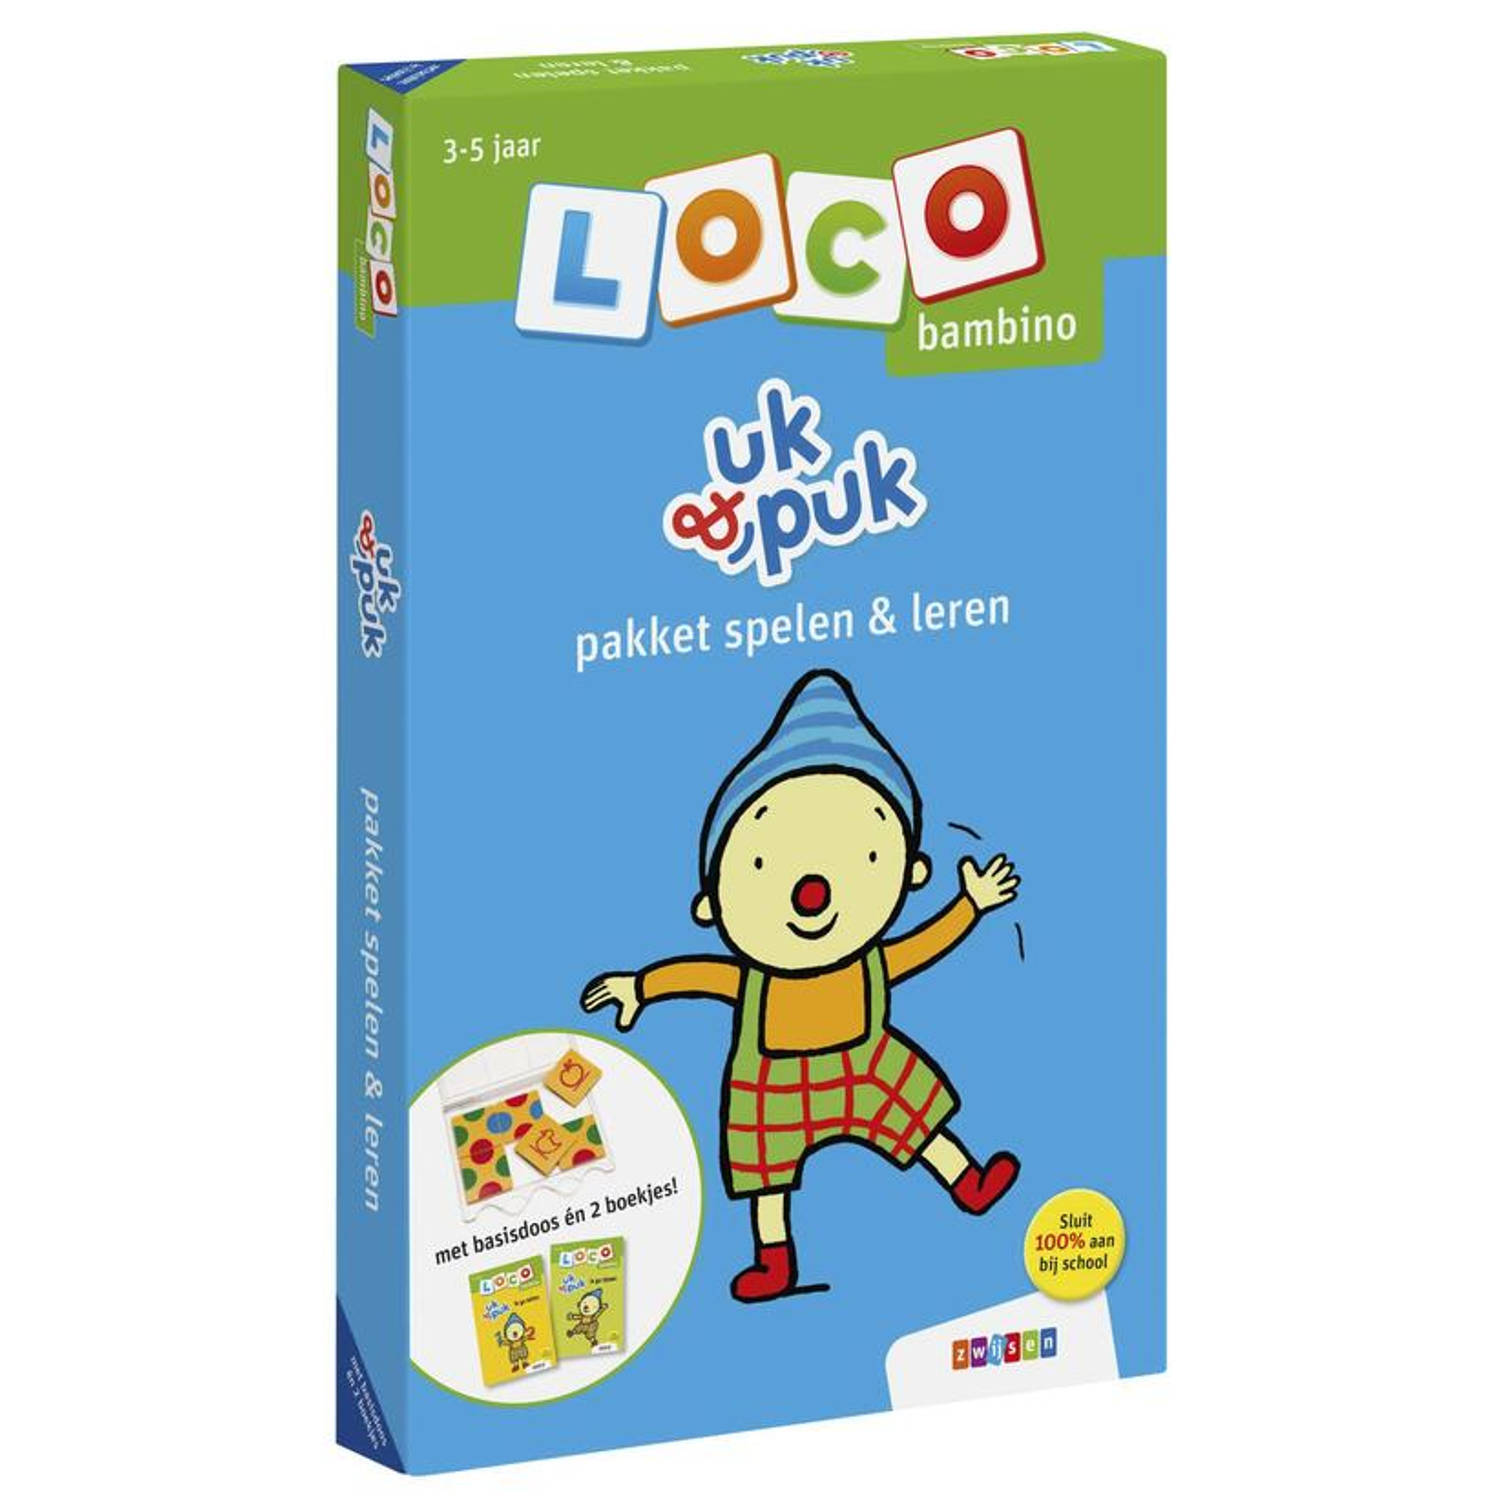 Paagman loco bambino uk & puk pakket spelen & leren